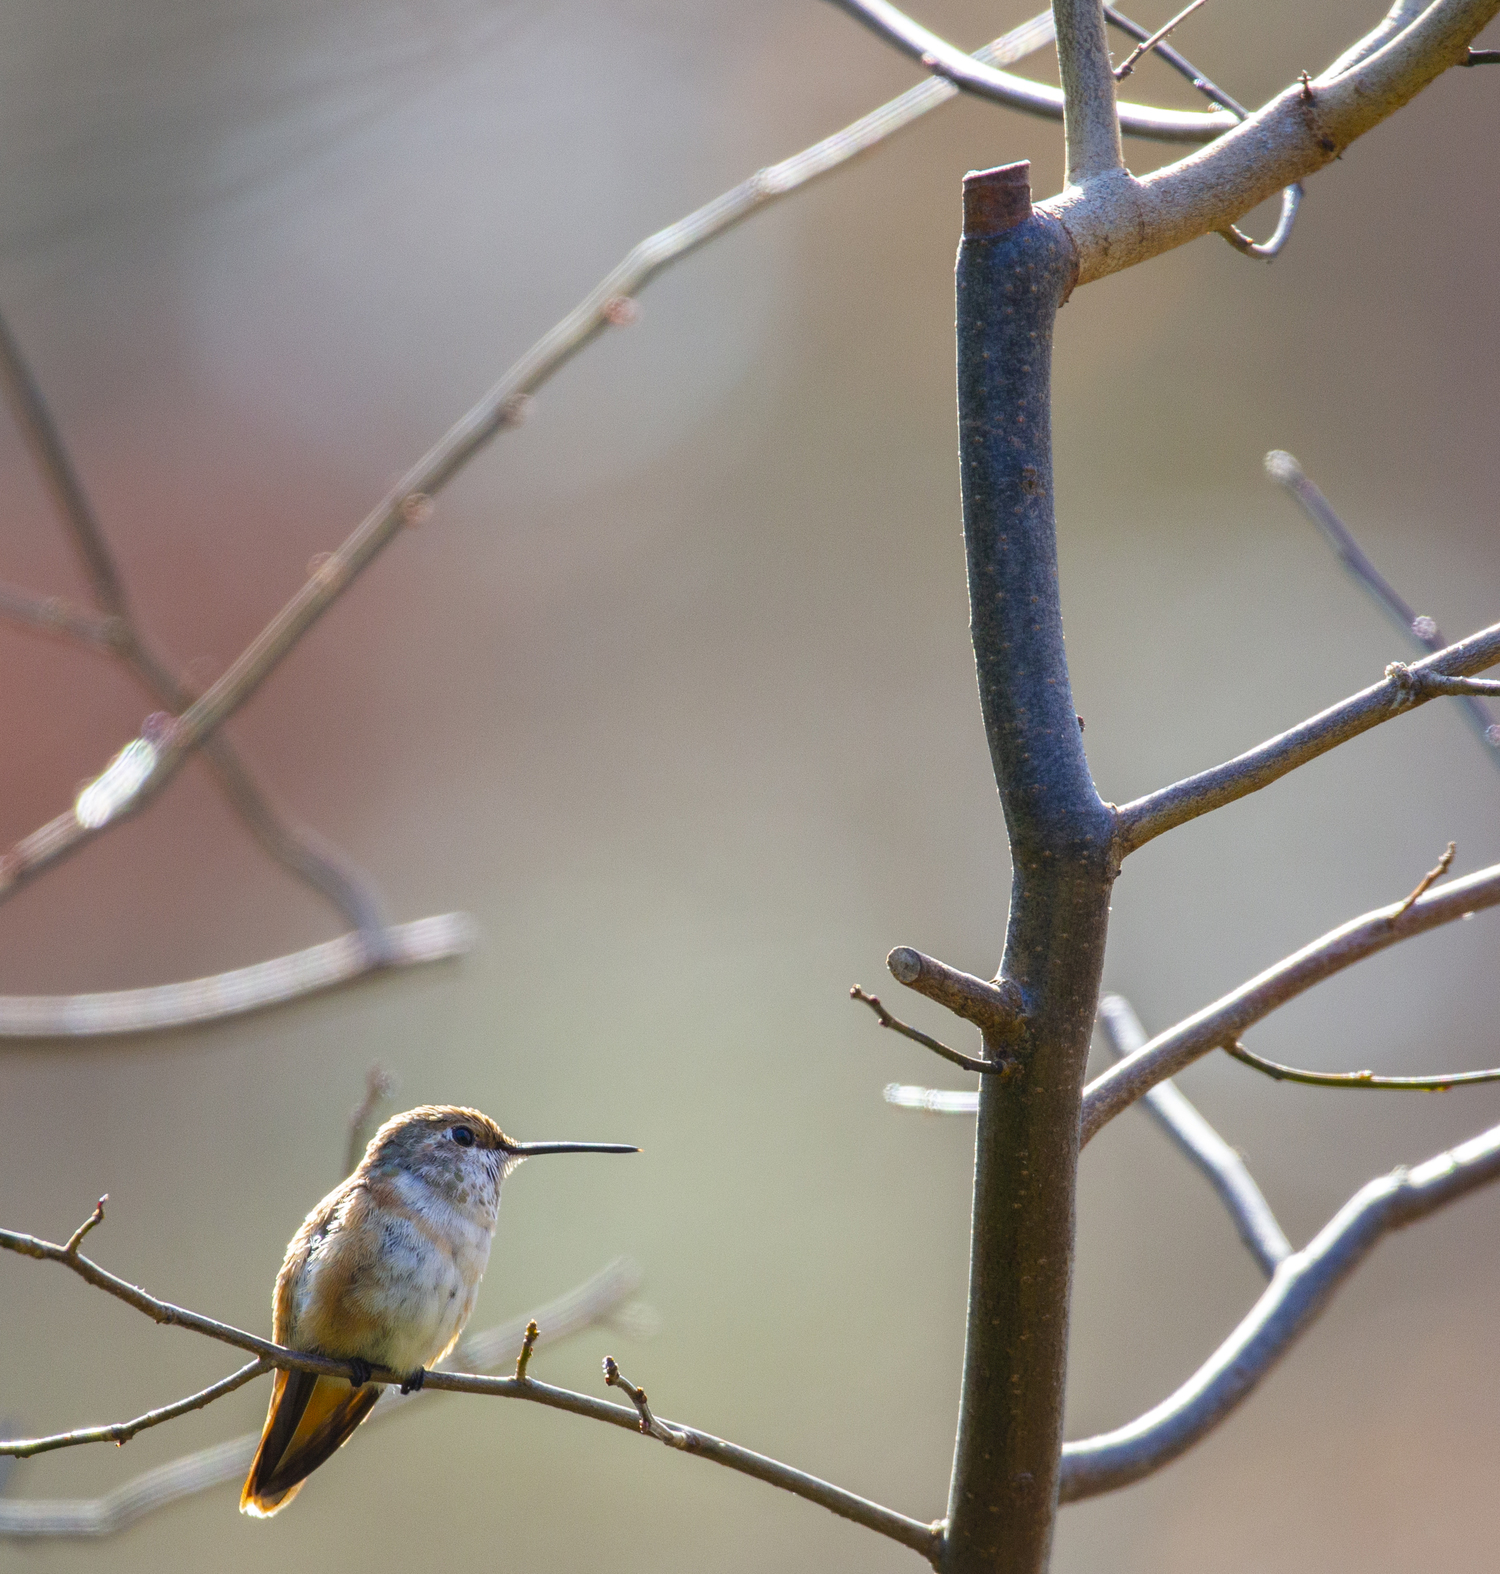 Roberta, a rufous hummingbird, finds a new branch to enjoy. Dr. Maria Bowling photograph